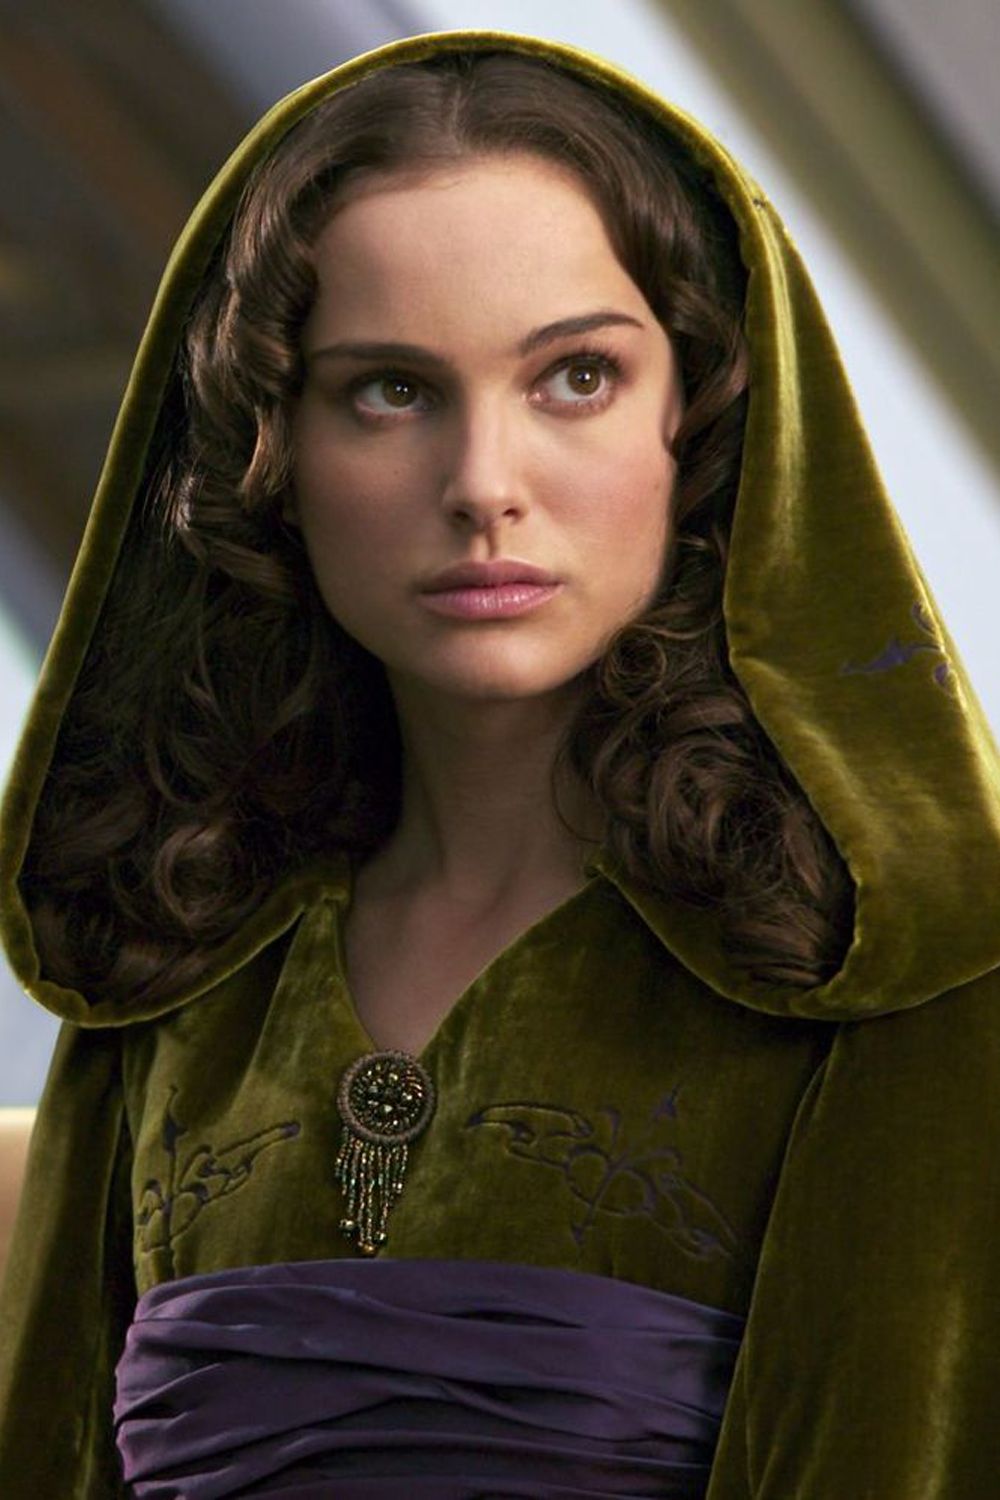 Natalie Portman as Padme Amidala in Star Wars Revenge of the Sith